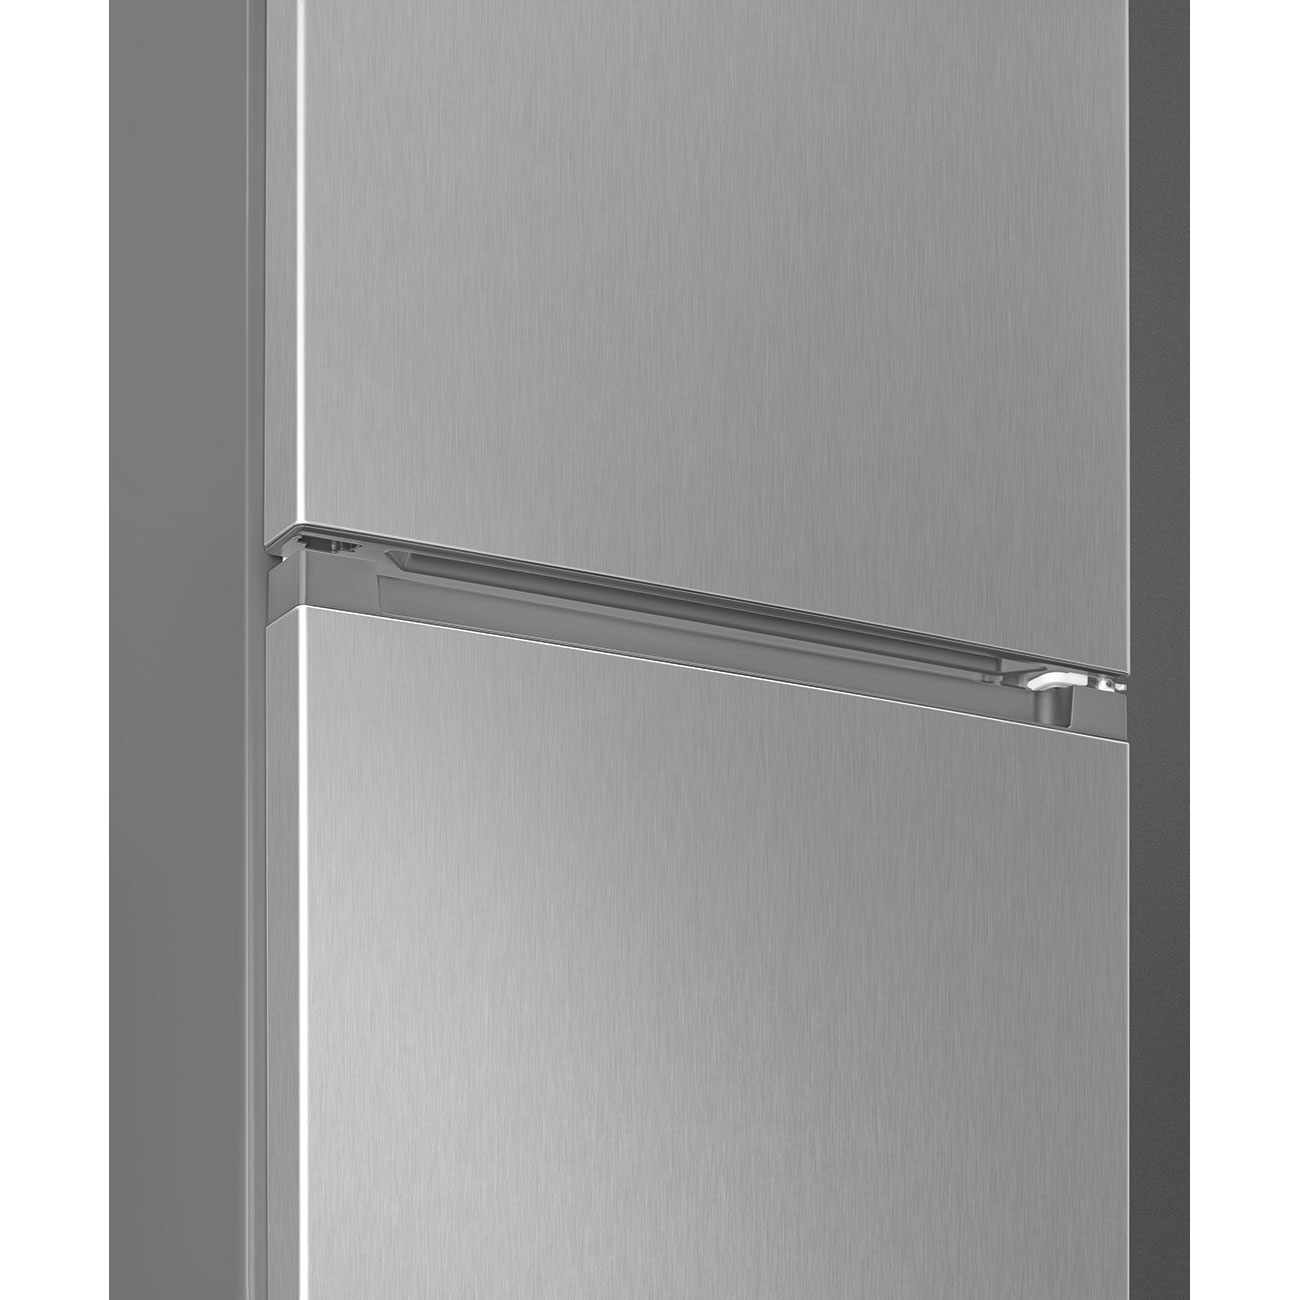 Bottom Mount Free standing refrigerator - Smeg_9